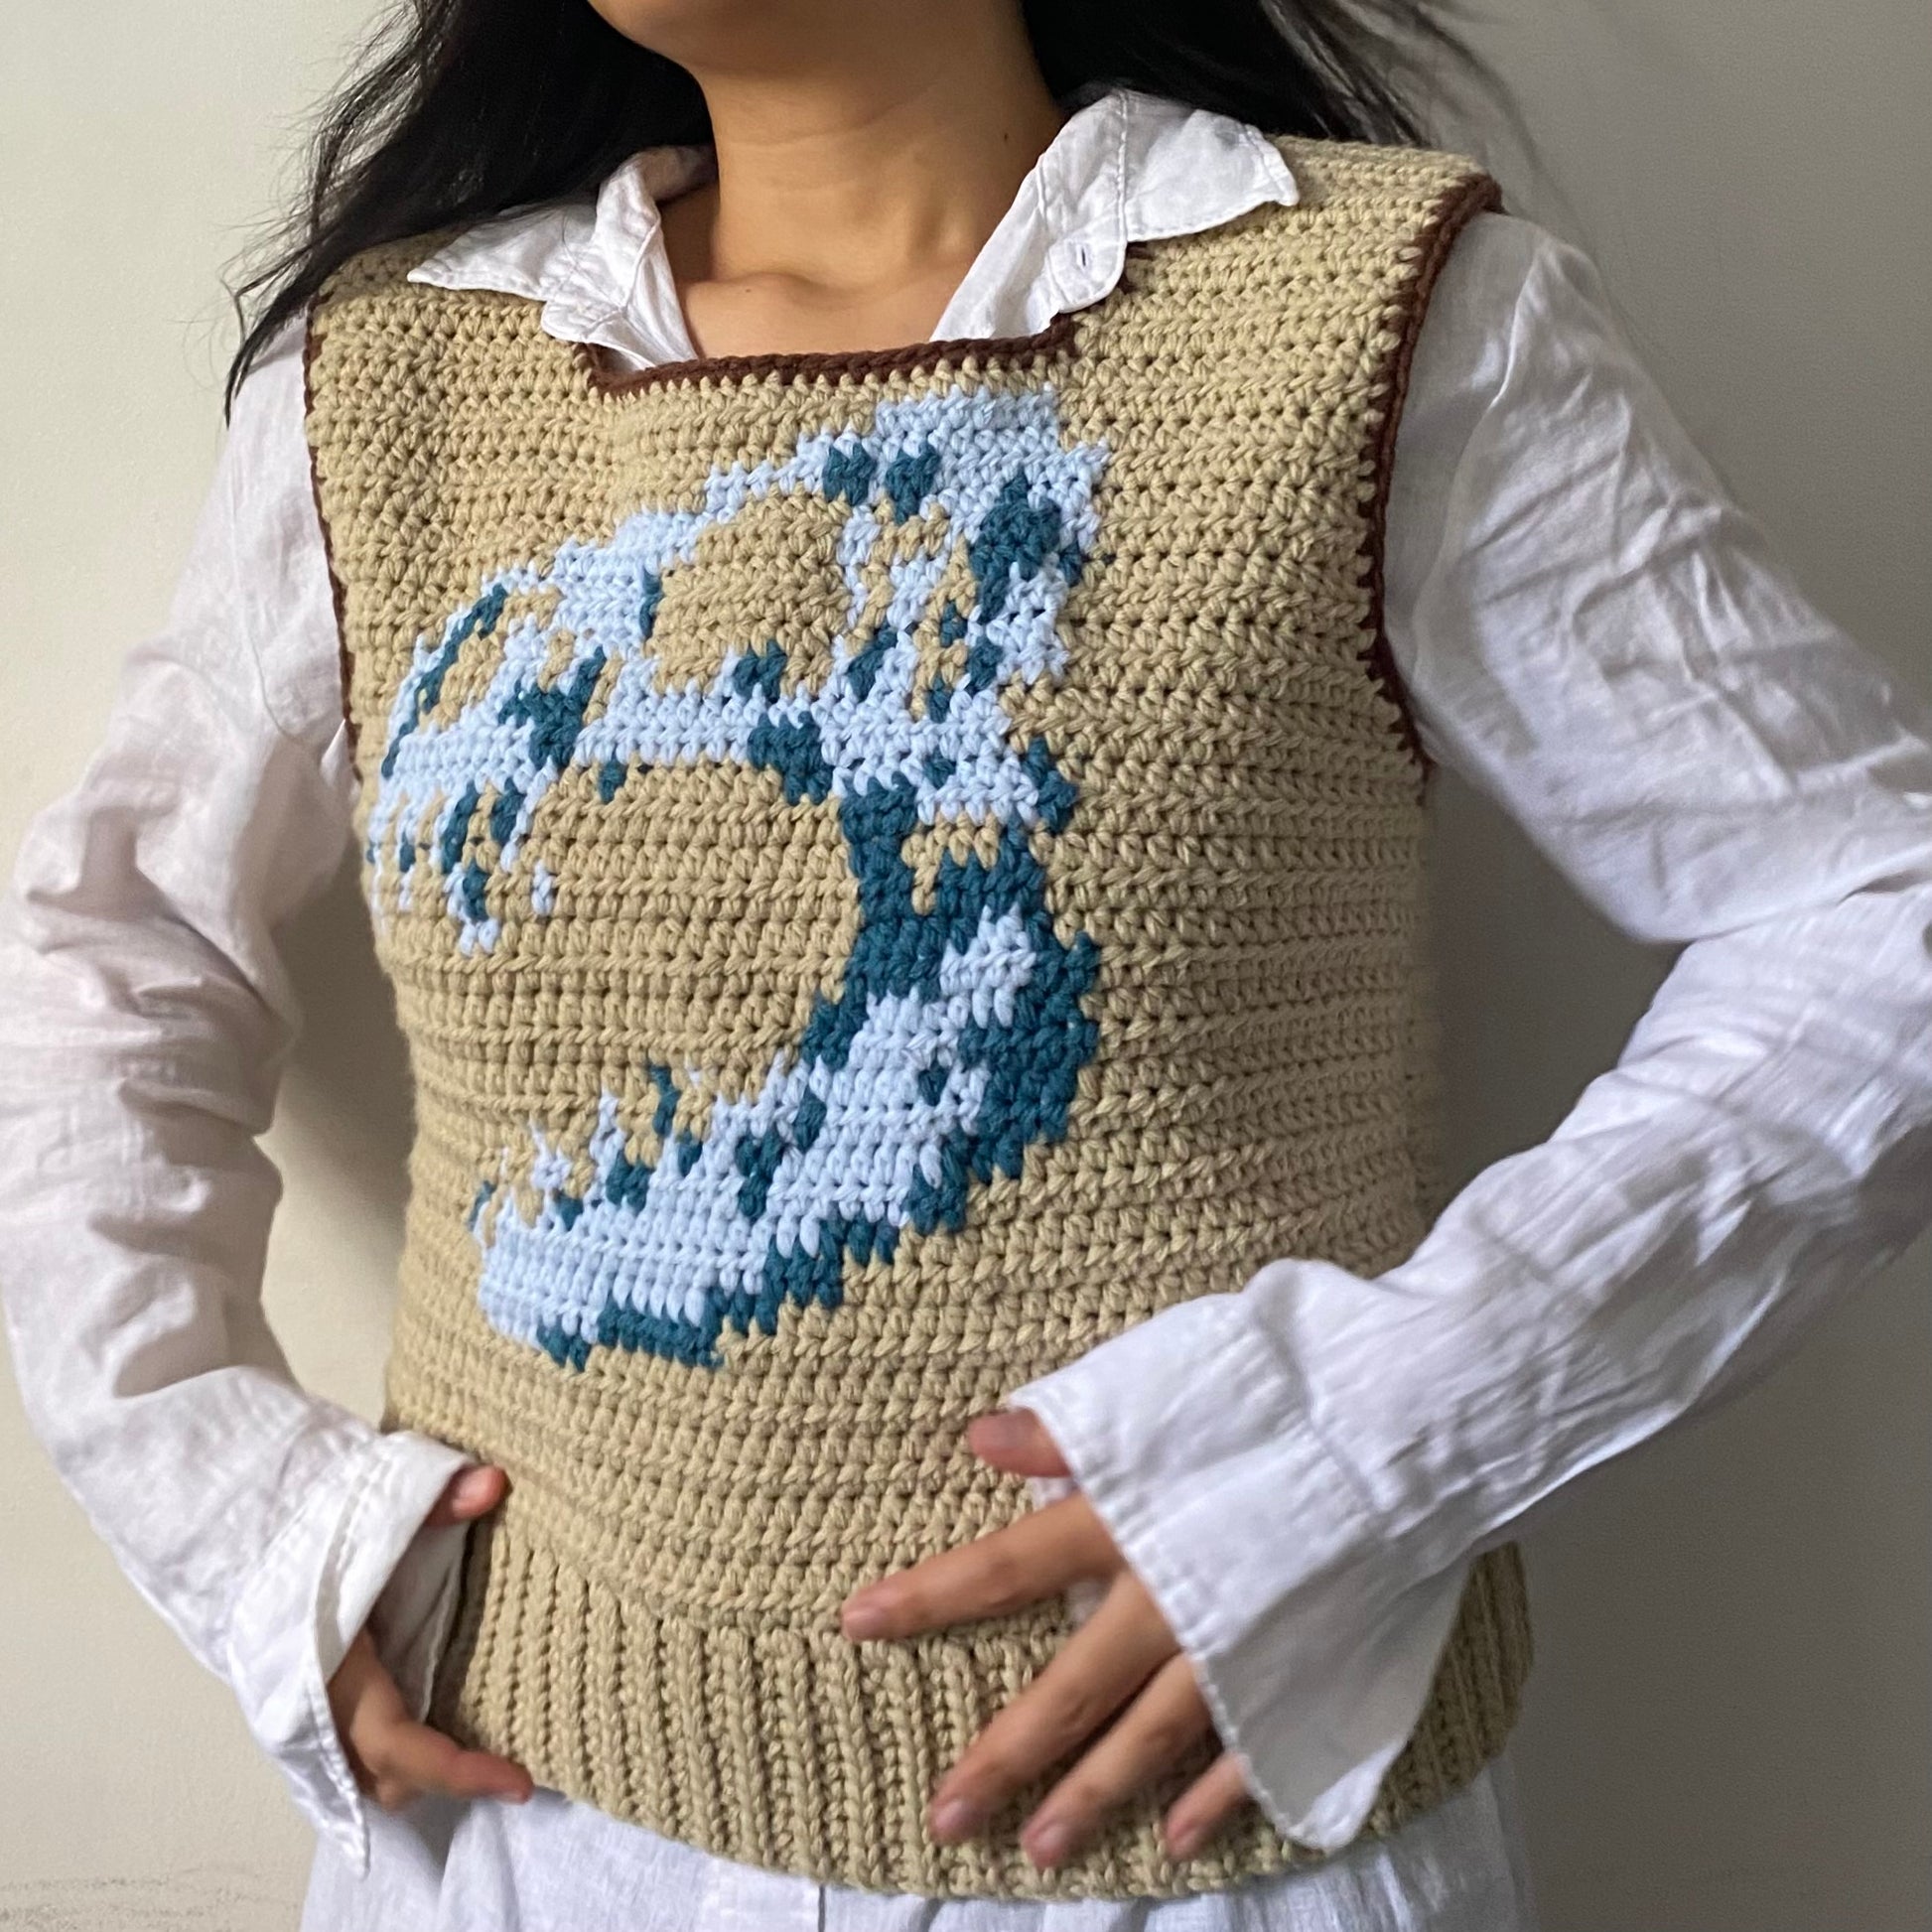 Crochet T-shirt Re-Styling – Devon Makes These